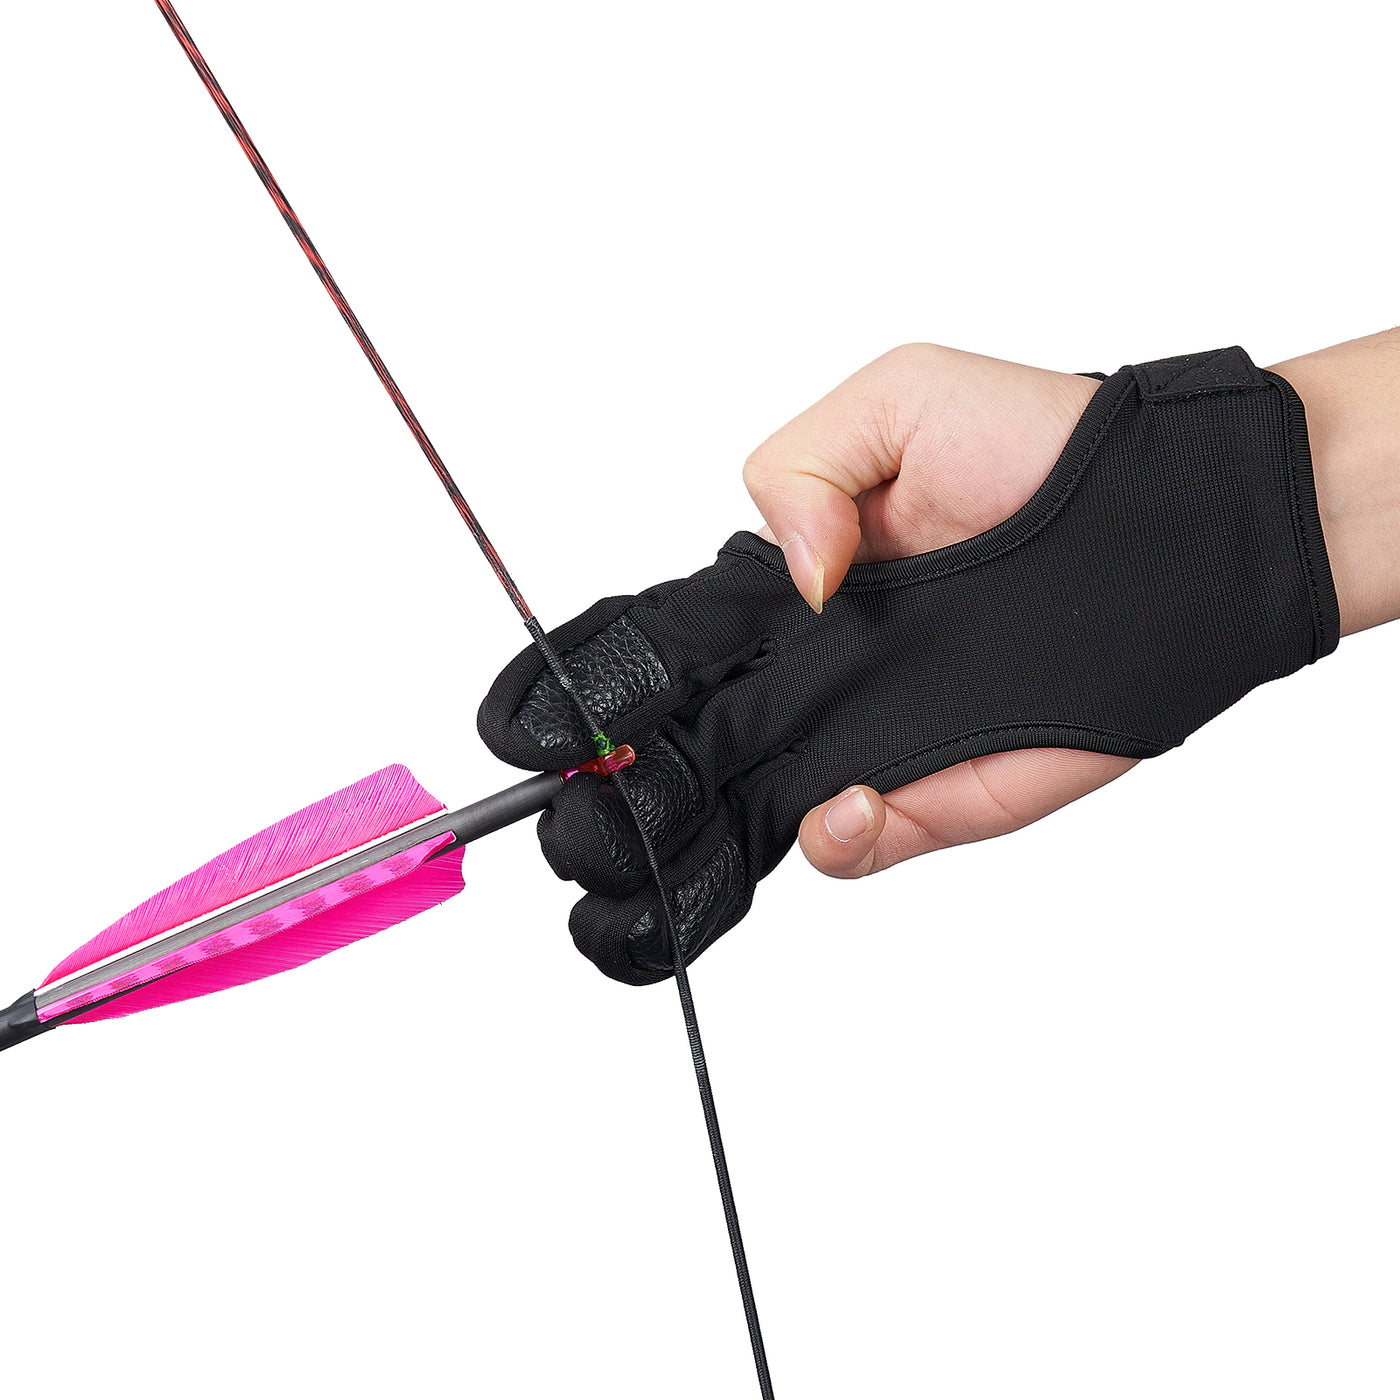 Archery Hand Glove 3-Finger Tab Fabric PU Leather